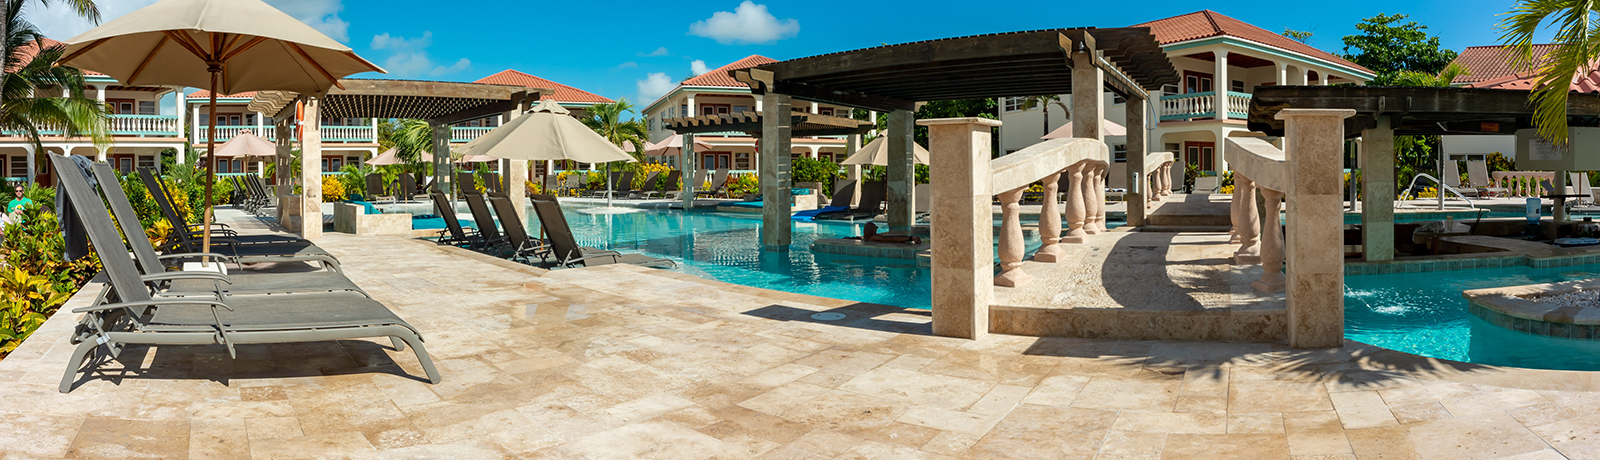 Belizean-Shores-Resort-Pool